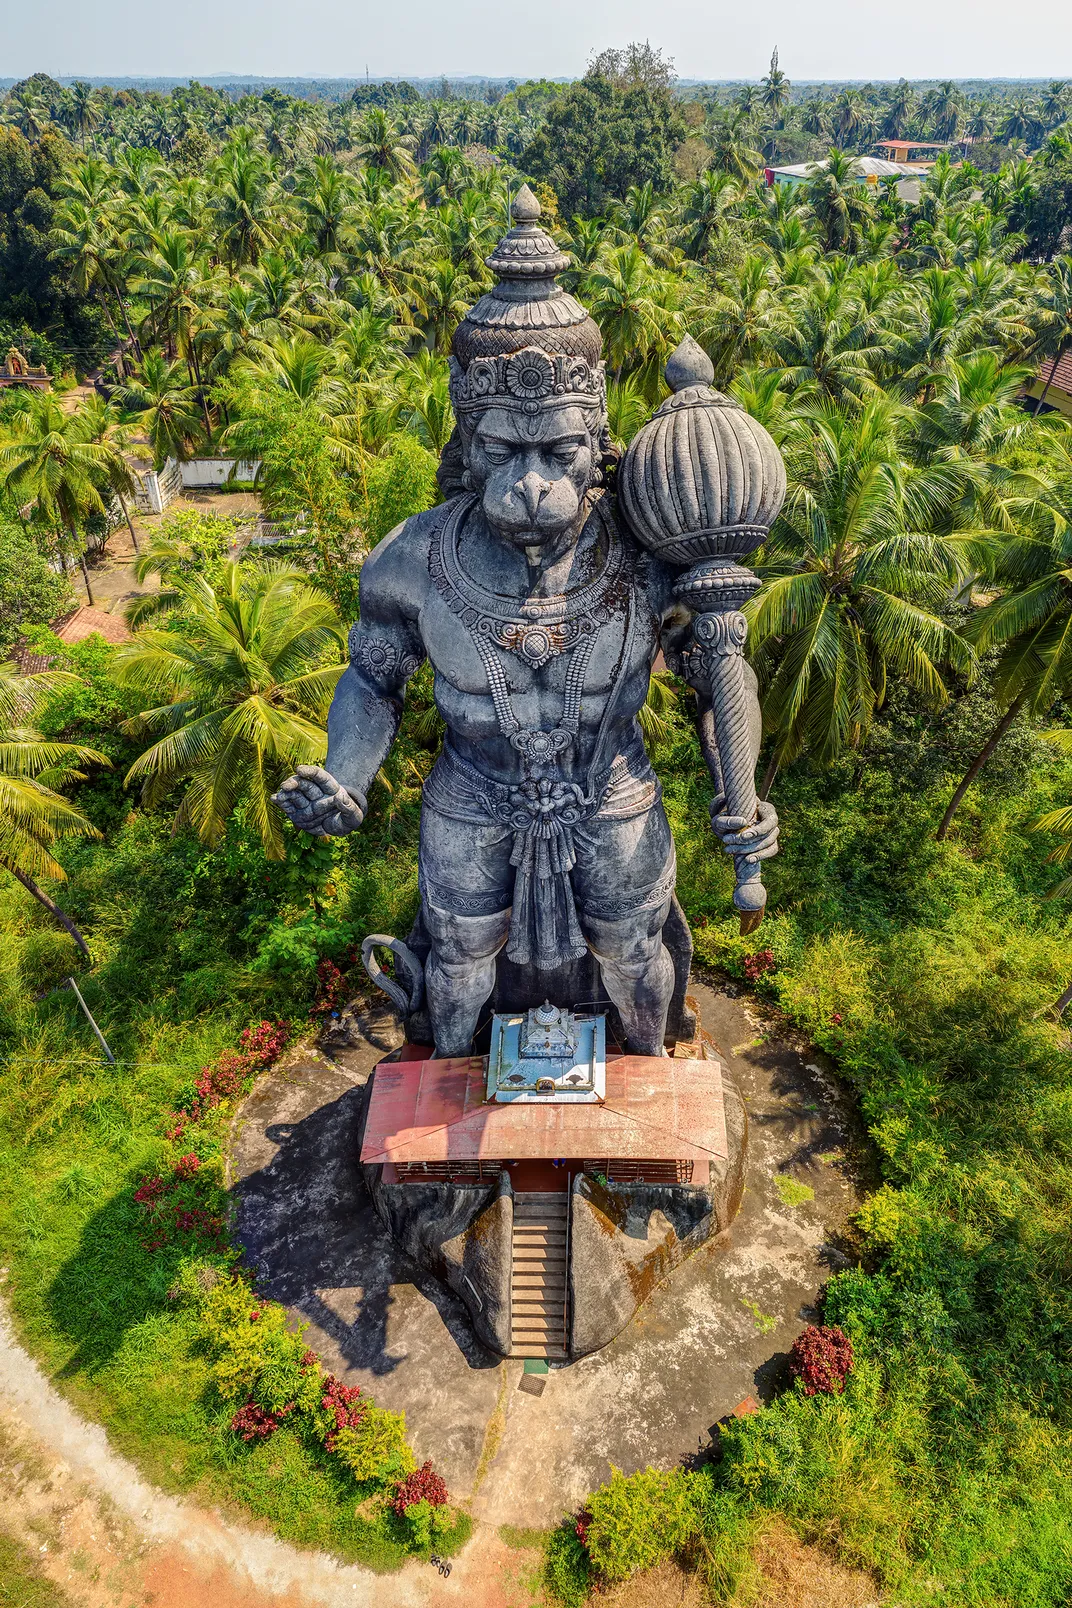 An 80-foot-tall statue of Hanuman in Hangalur, India